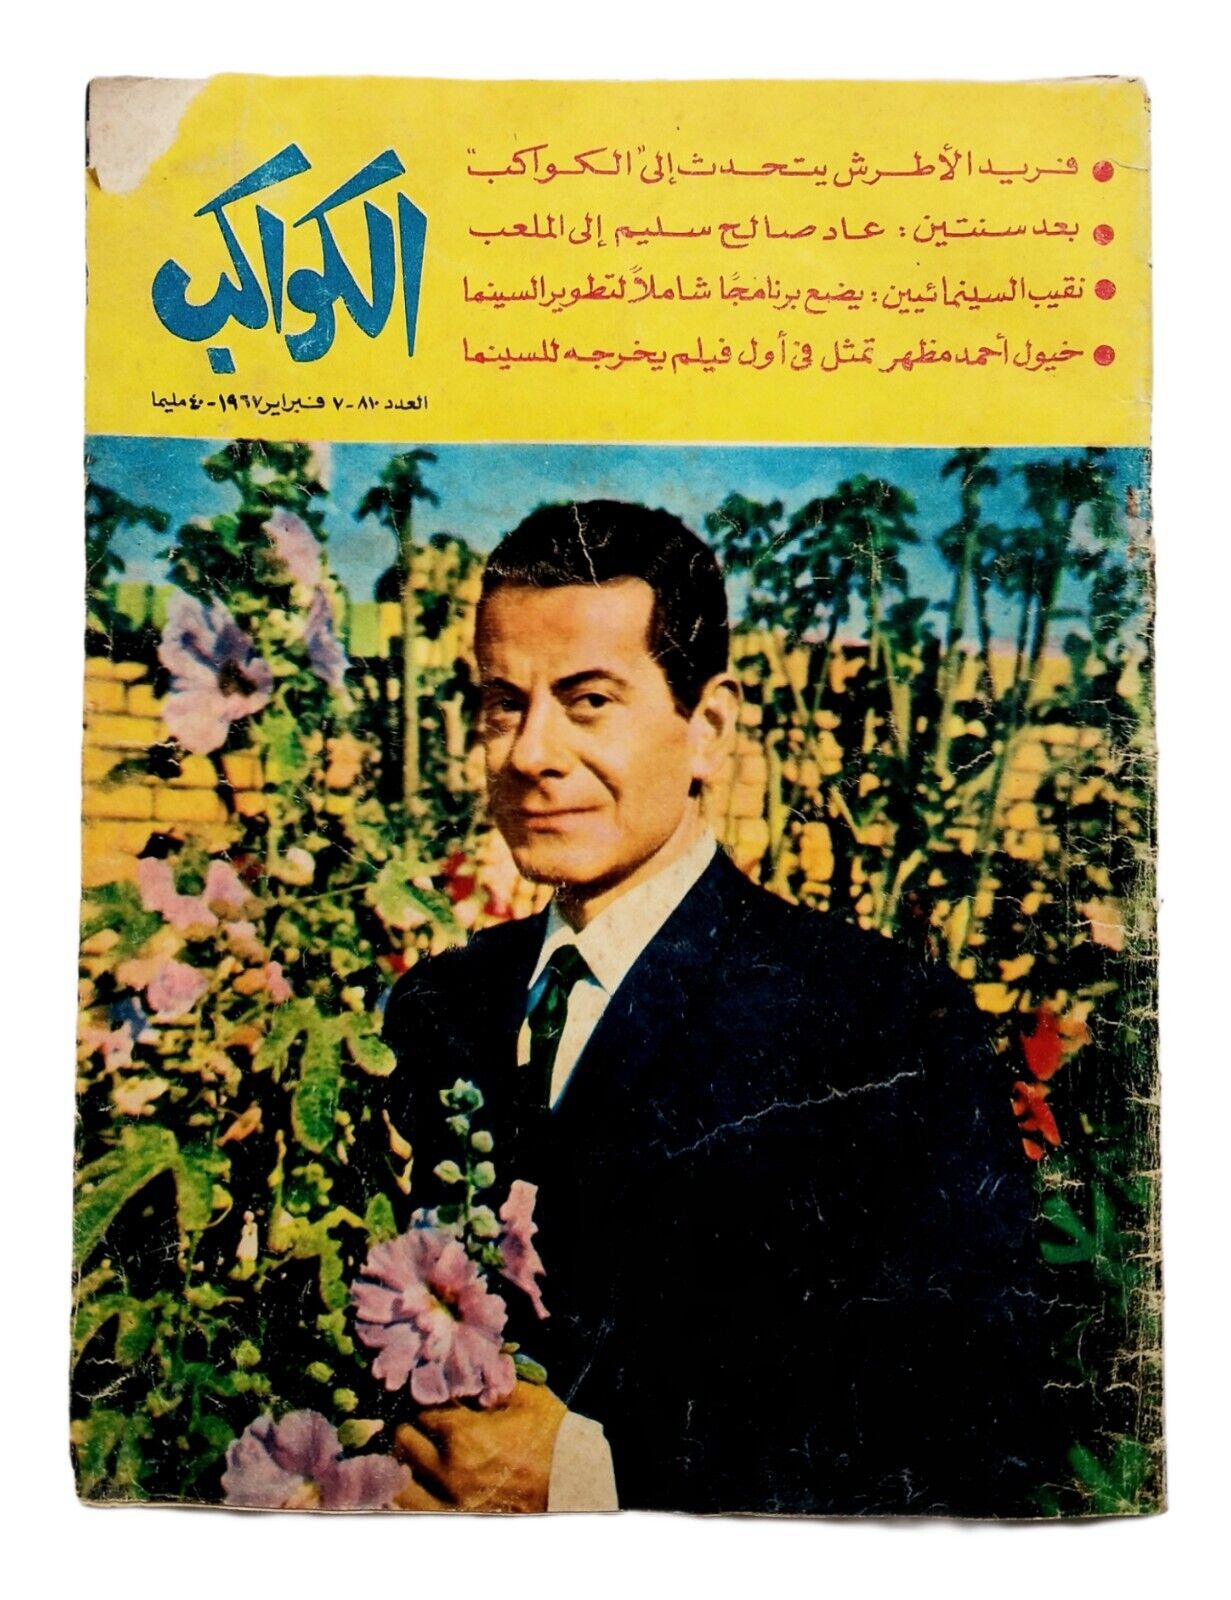 1967 Al Kawakeb Magazine Farid Al-Atrash Cover # 810 مجلة الكواكب - فريد الأطرش